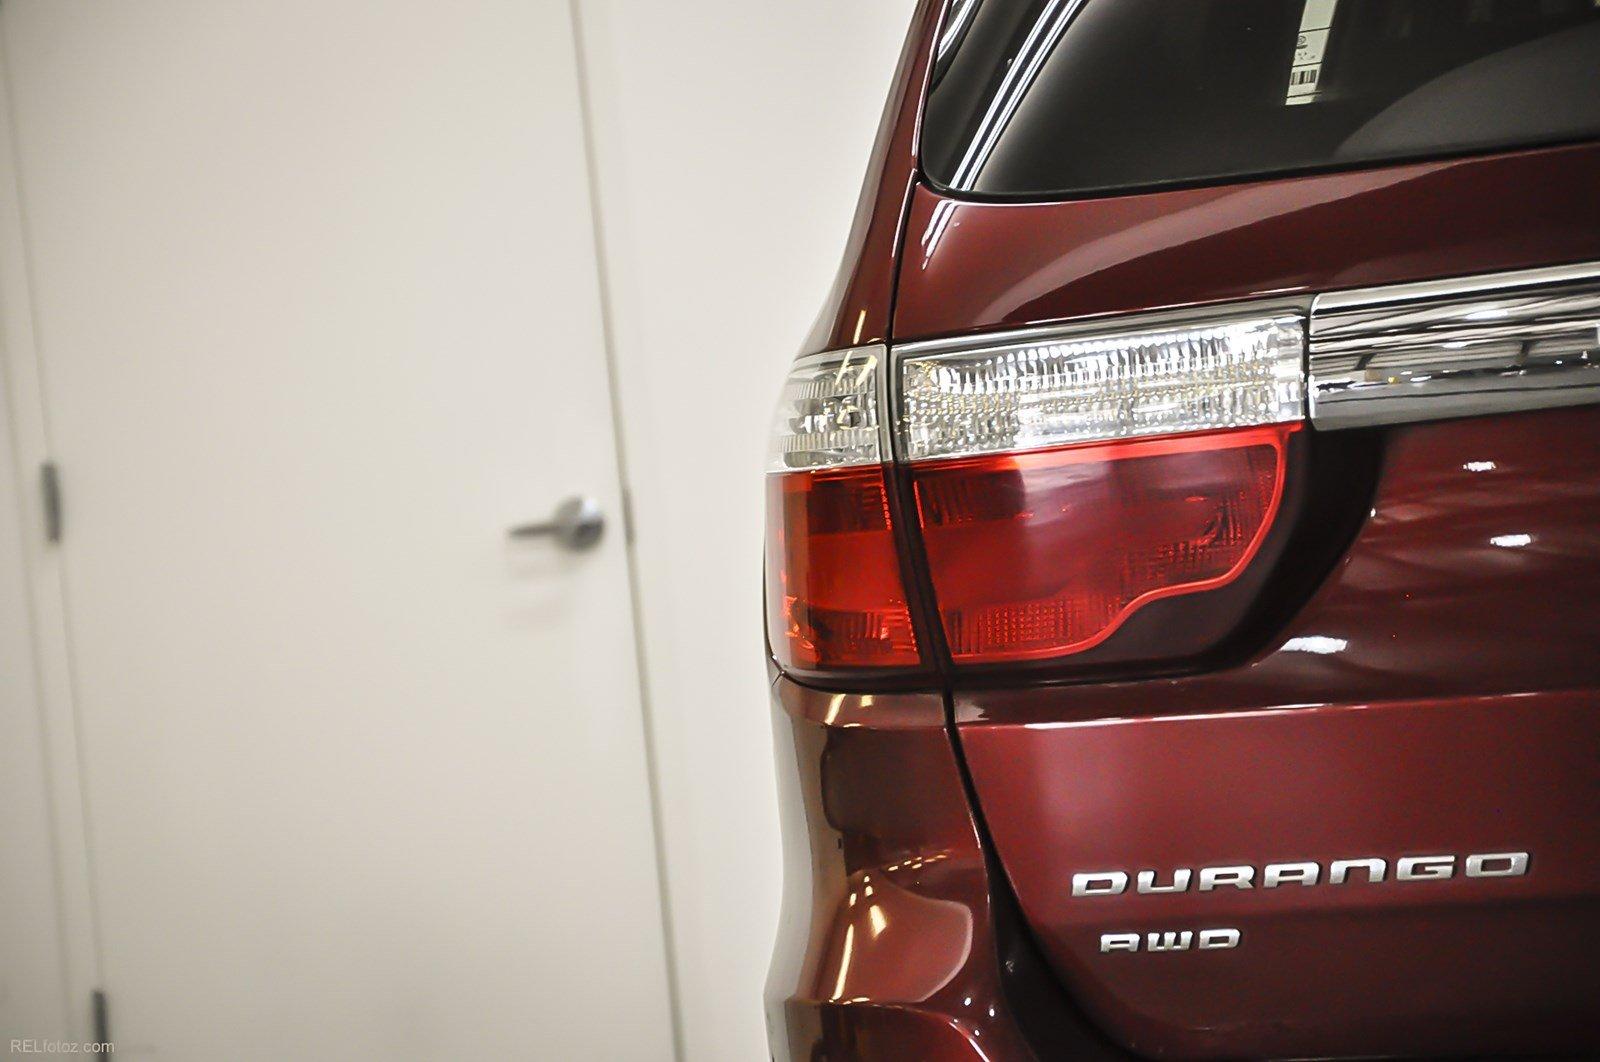 Used 2013 Dodge Durango Crew for sale Sold at Gravity Autos Marietta in Marietta GA 30060 6